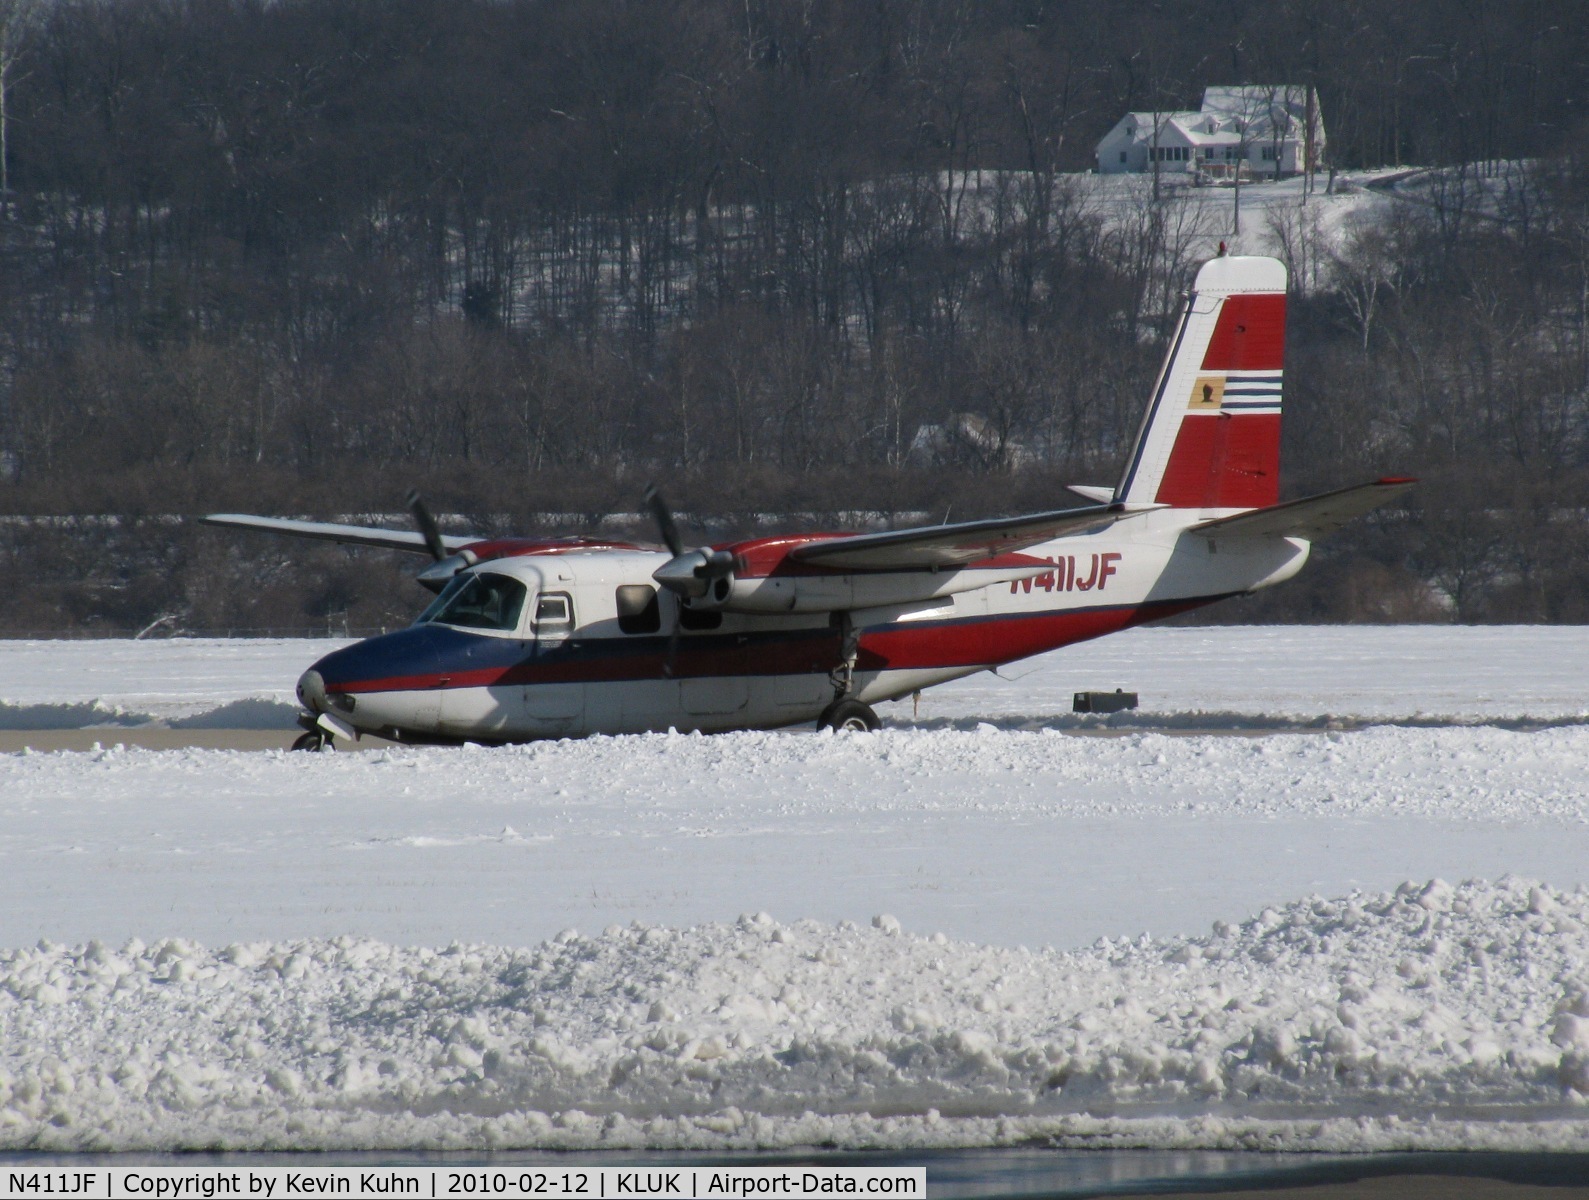 N411JF, Aero Commander 500-B C/N 500B-1014-35, Arriving at a snowy Lunken